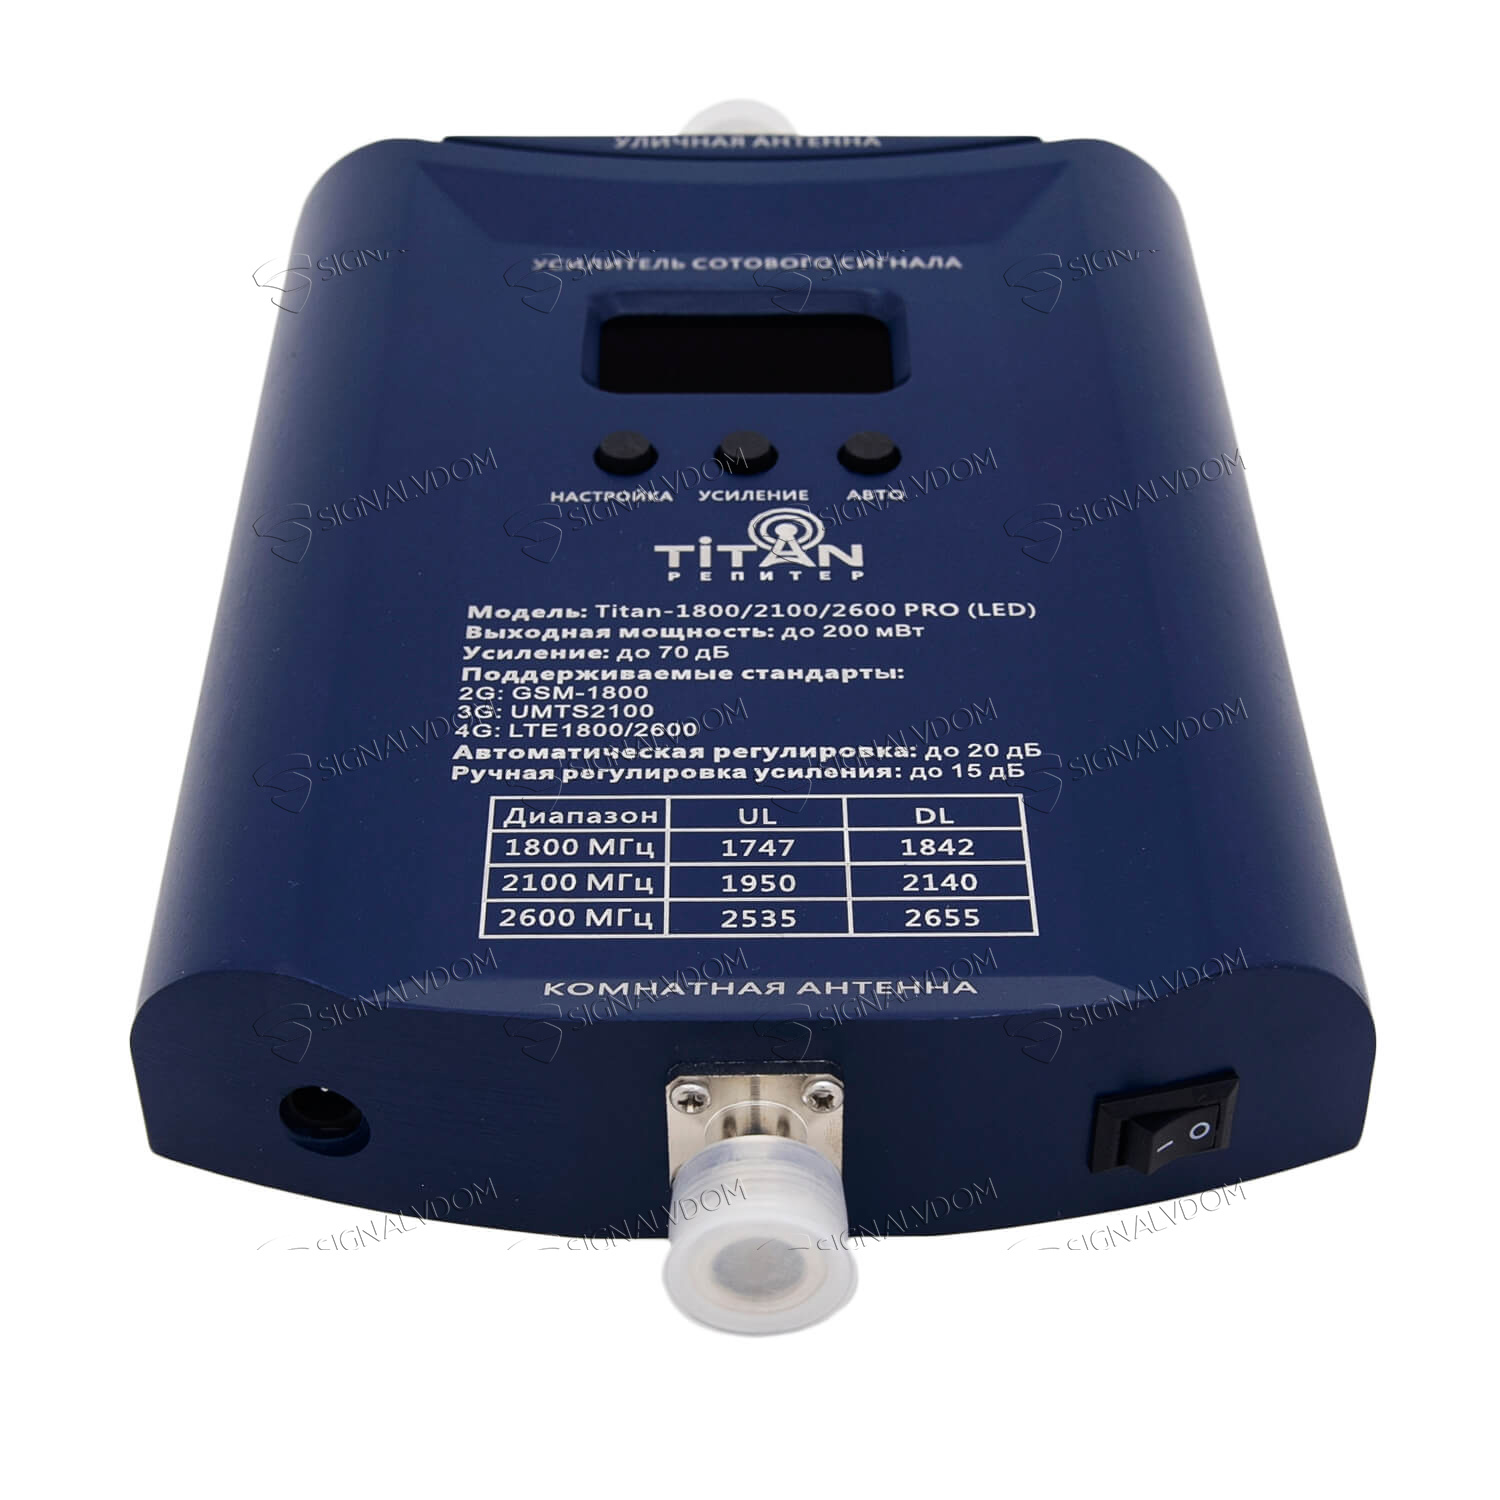 Усилитель сигнала связи Titan-1800/2100/2600 PRO комплект (LED) - 5